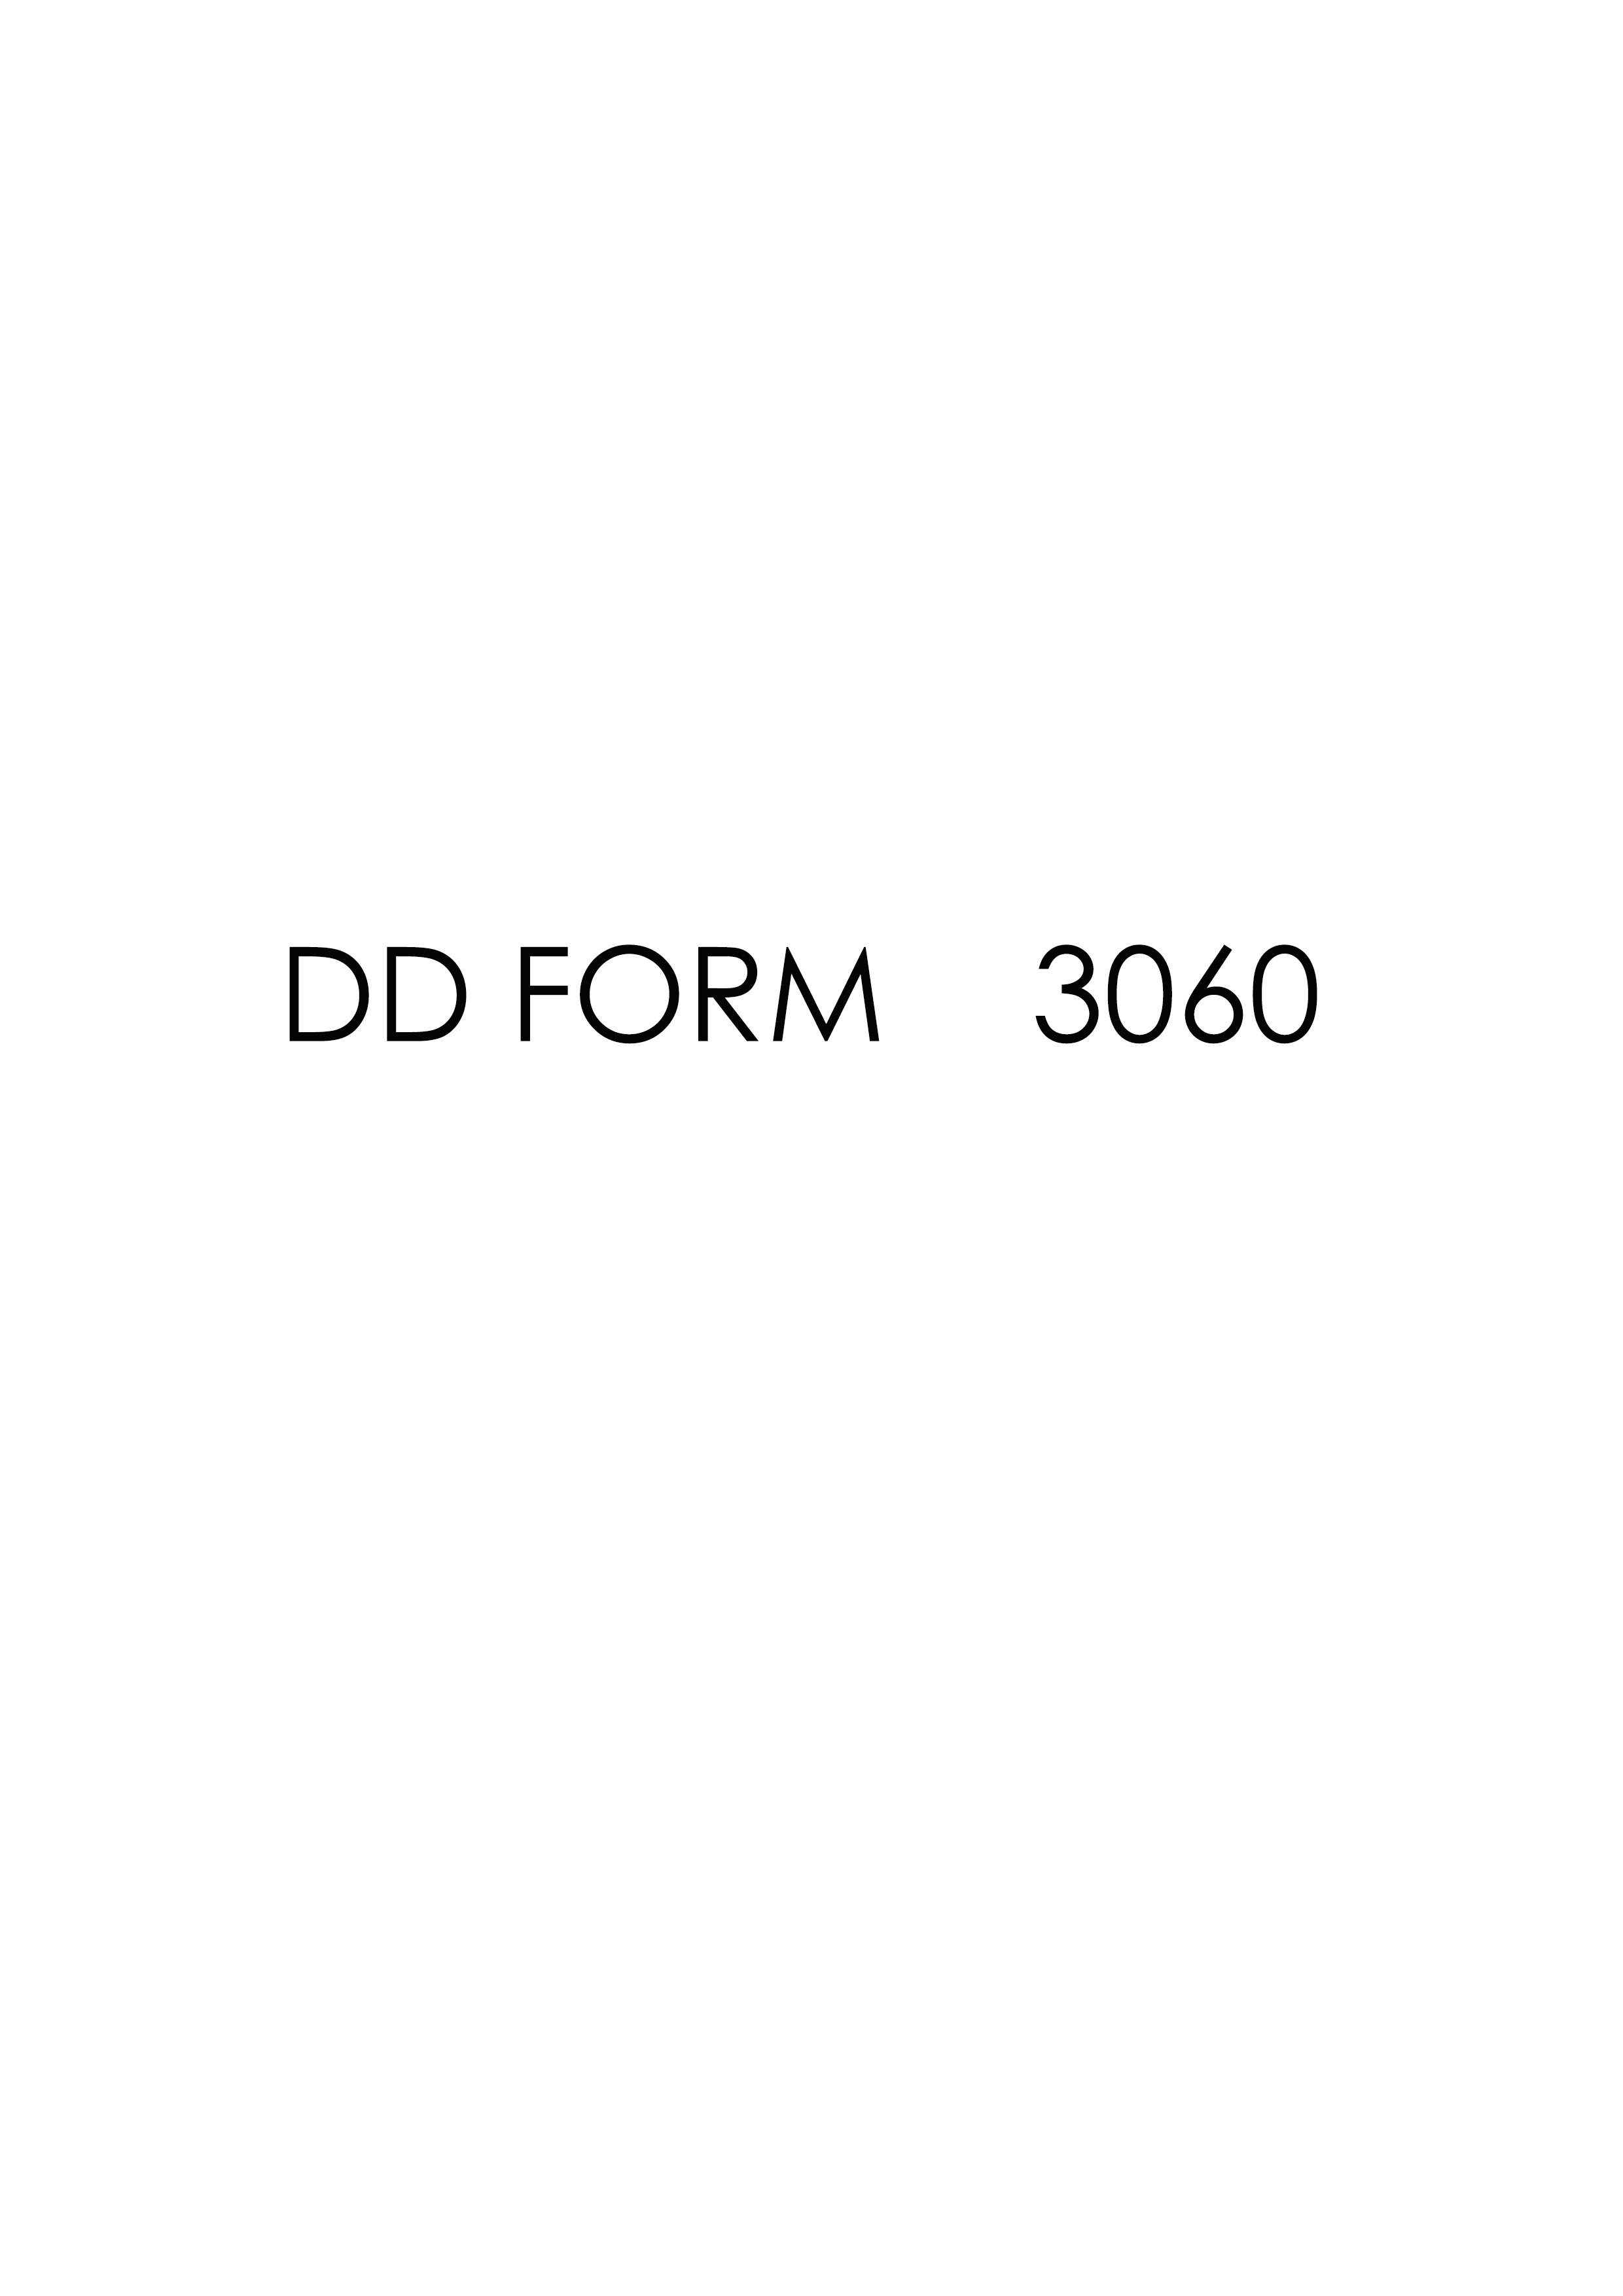 Download dd form 3060